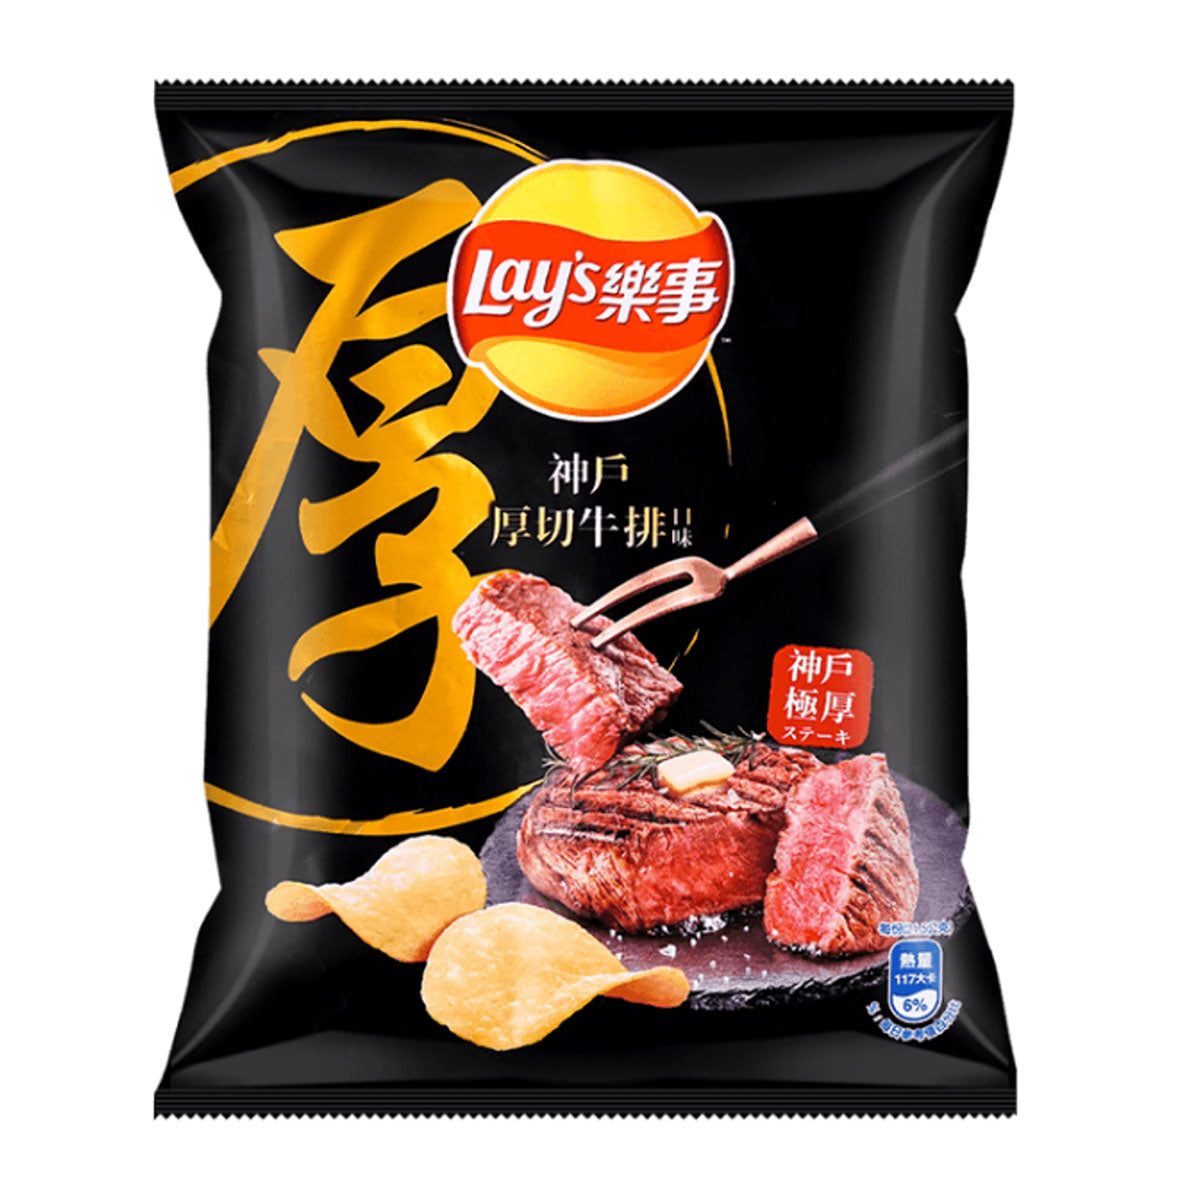 lay's potato chips kobe steak flavor - 34g